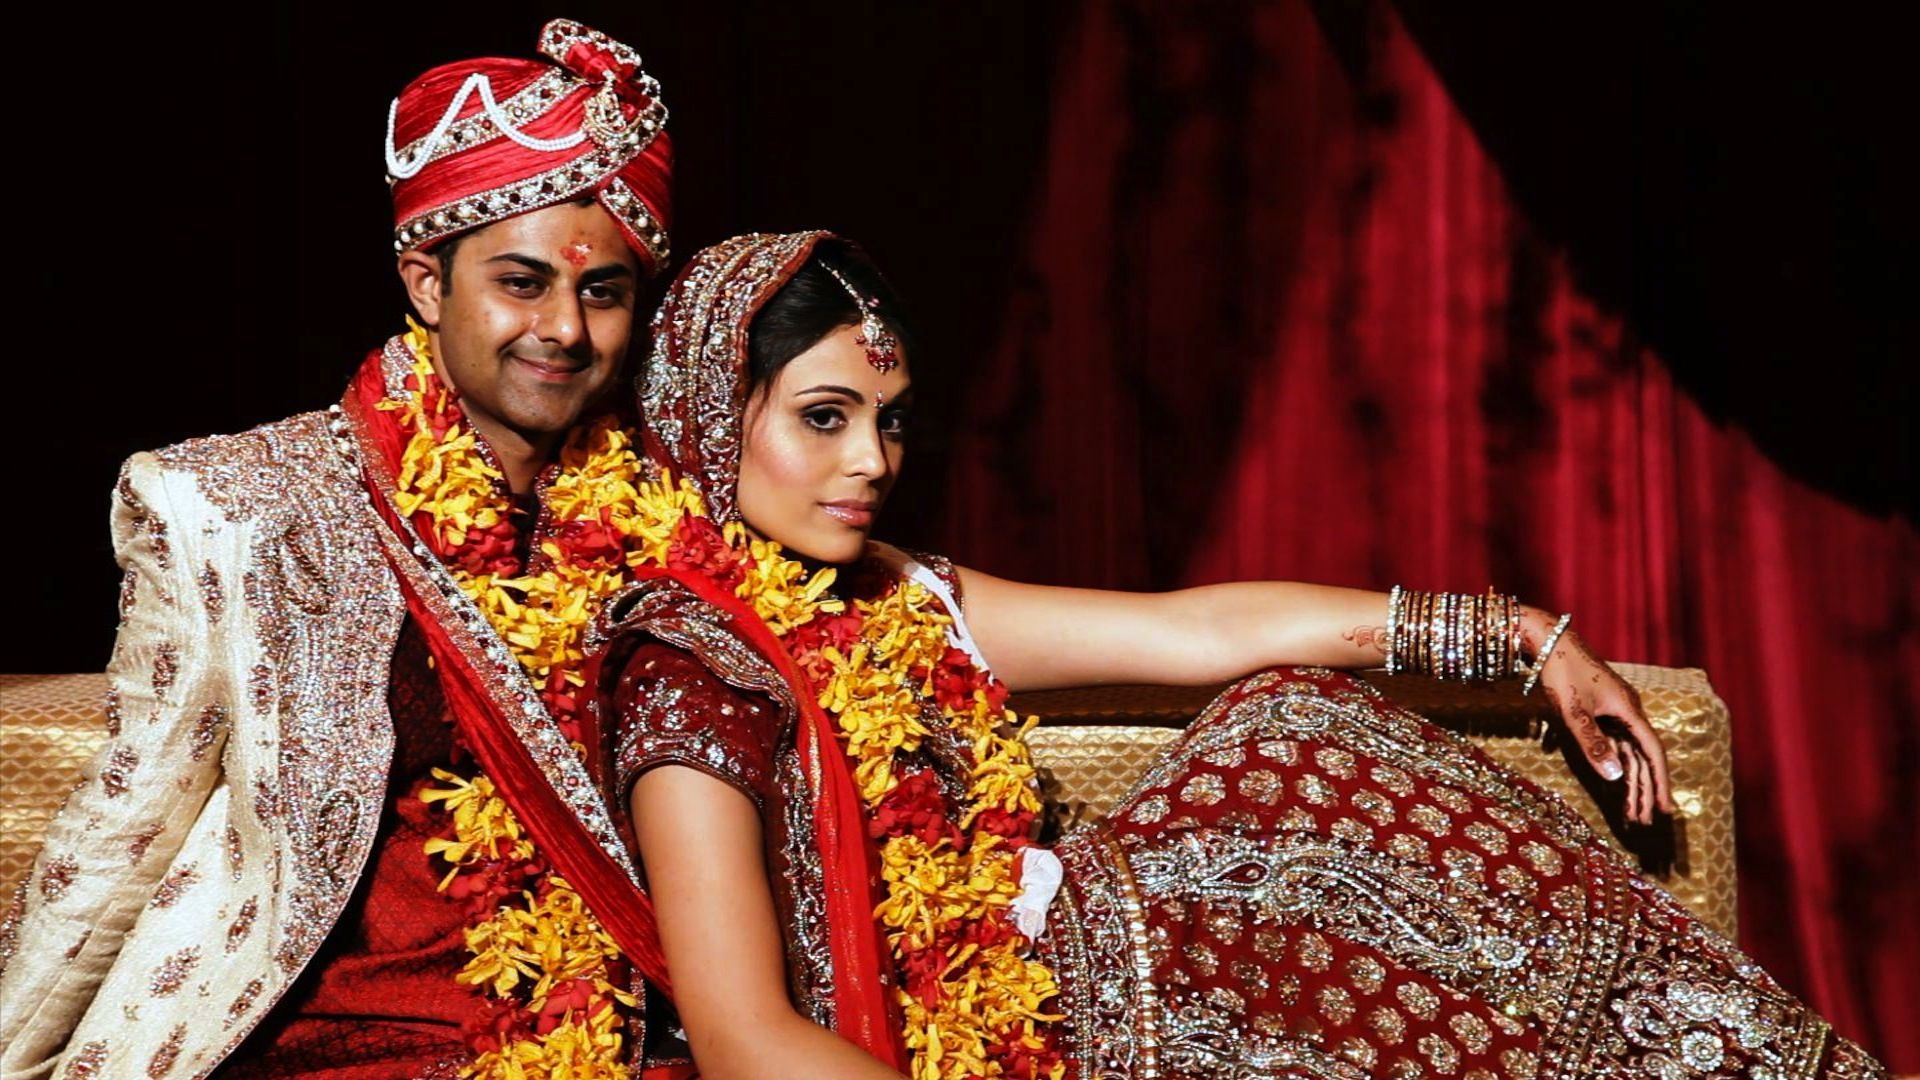 Indian Groom Bride Romantic Posing Wedding स्टॉक फ़ोटो 1396817666 |  Shutterstock